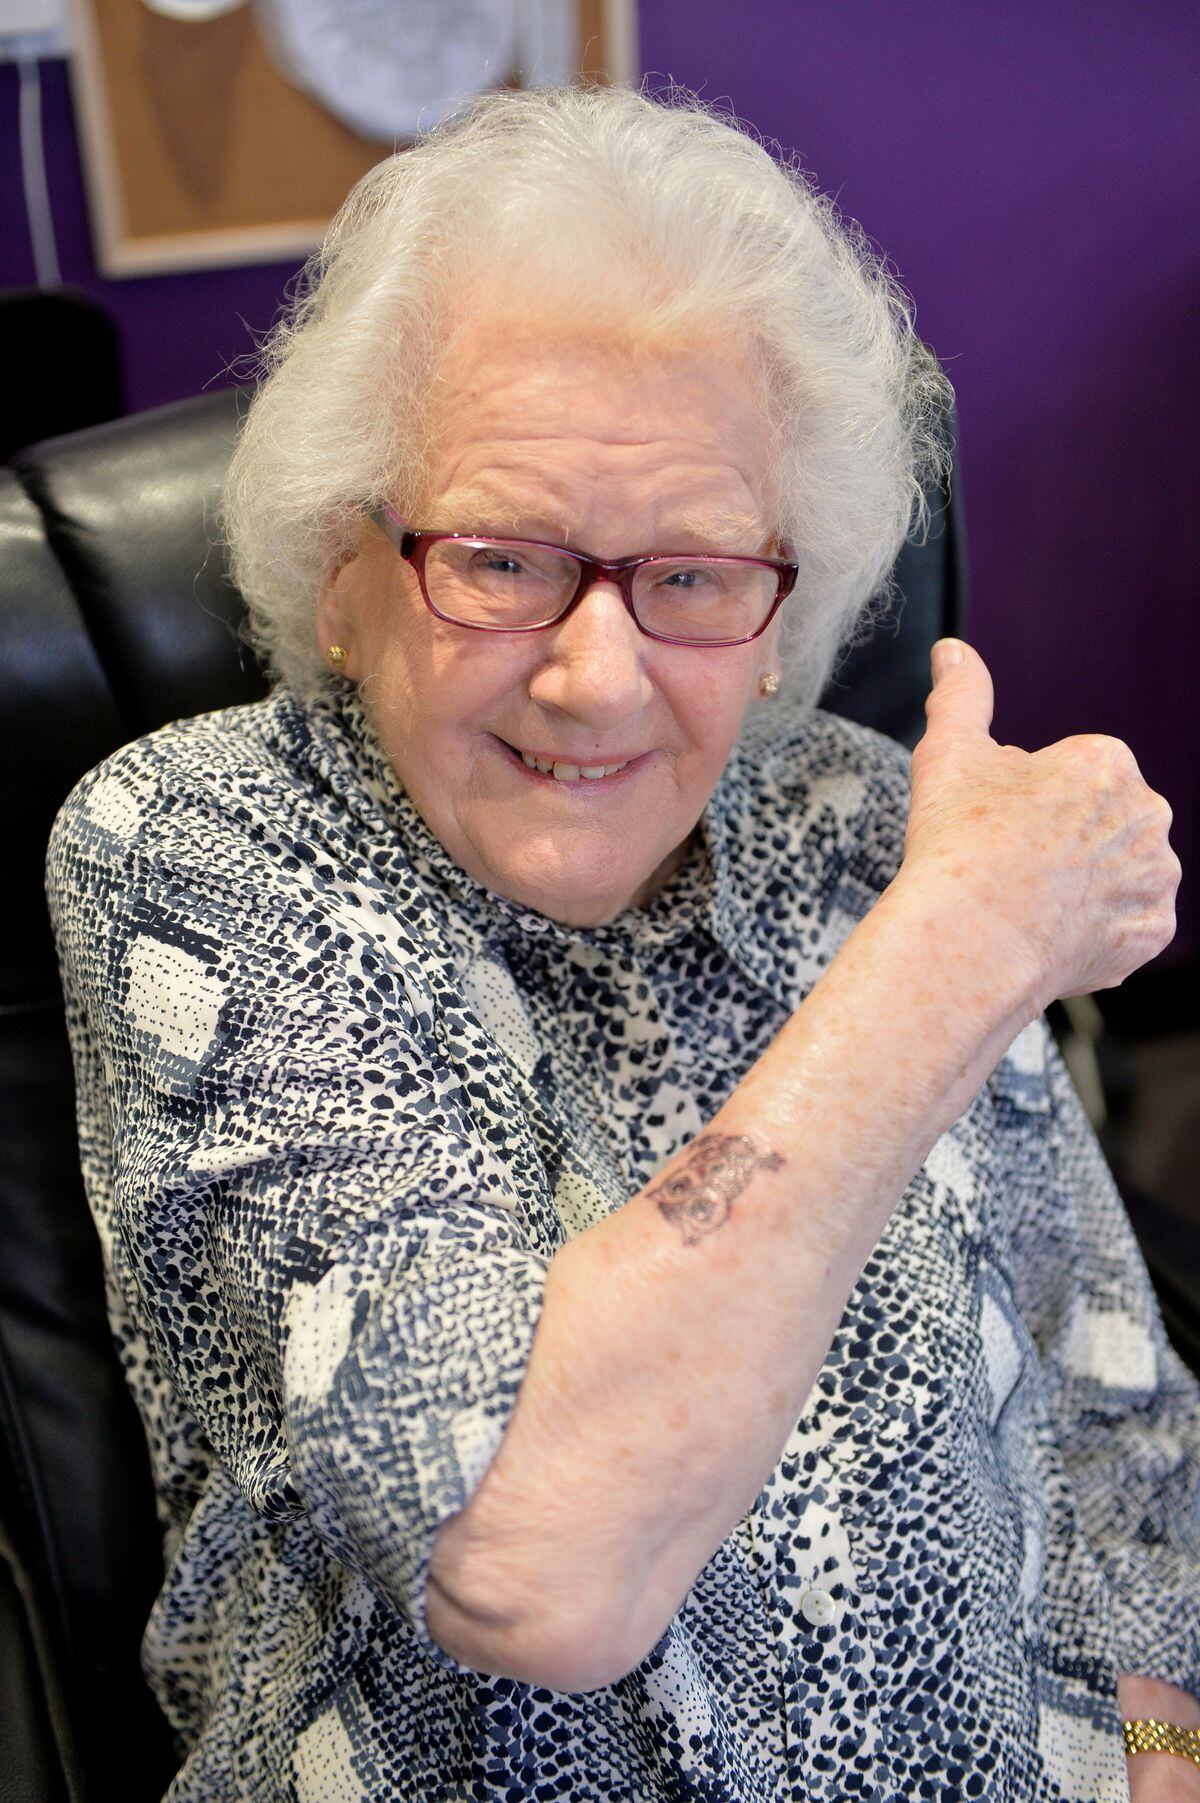 Joan celebrating her new tattoo on her 90th birthday.